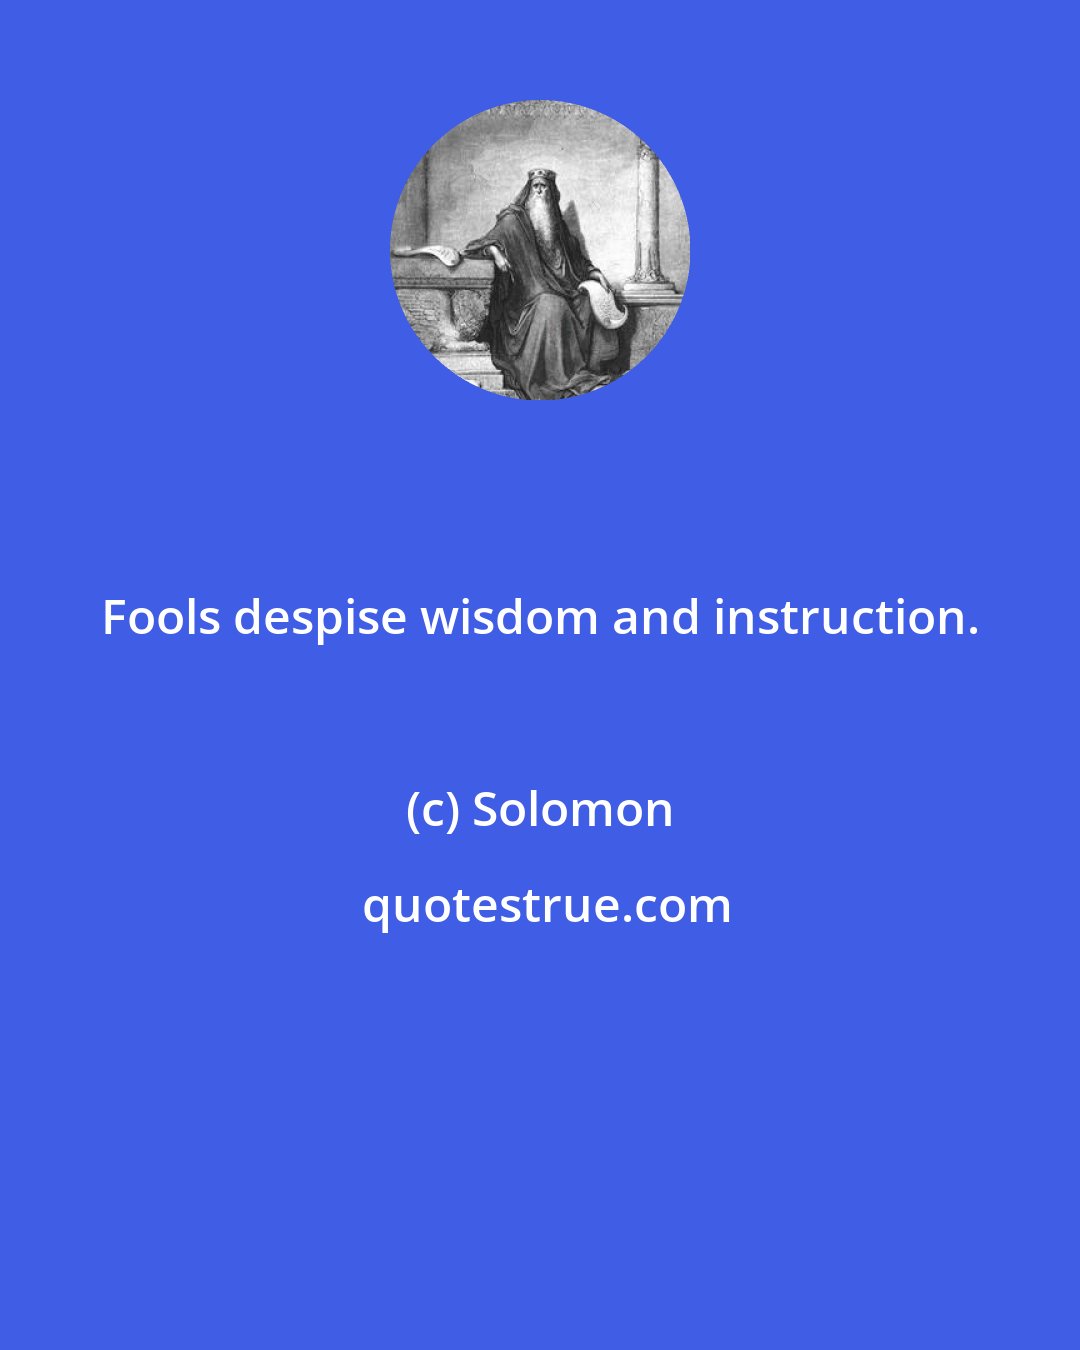 Solomon: Fools despise wisdom and instruction.